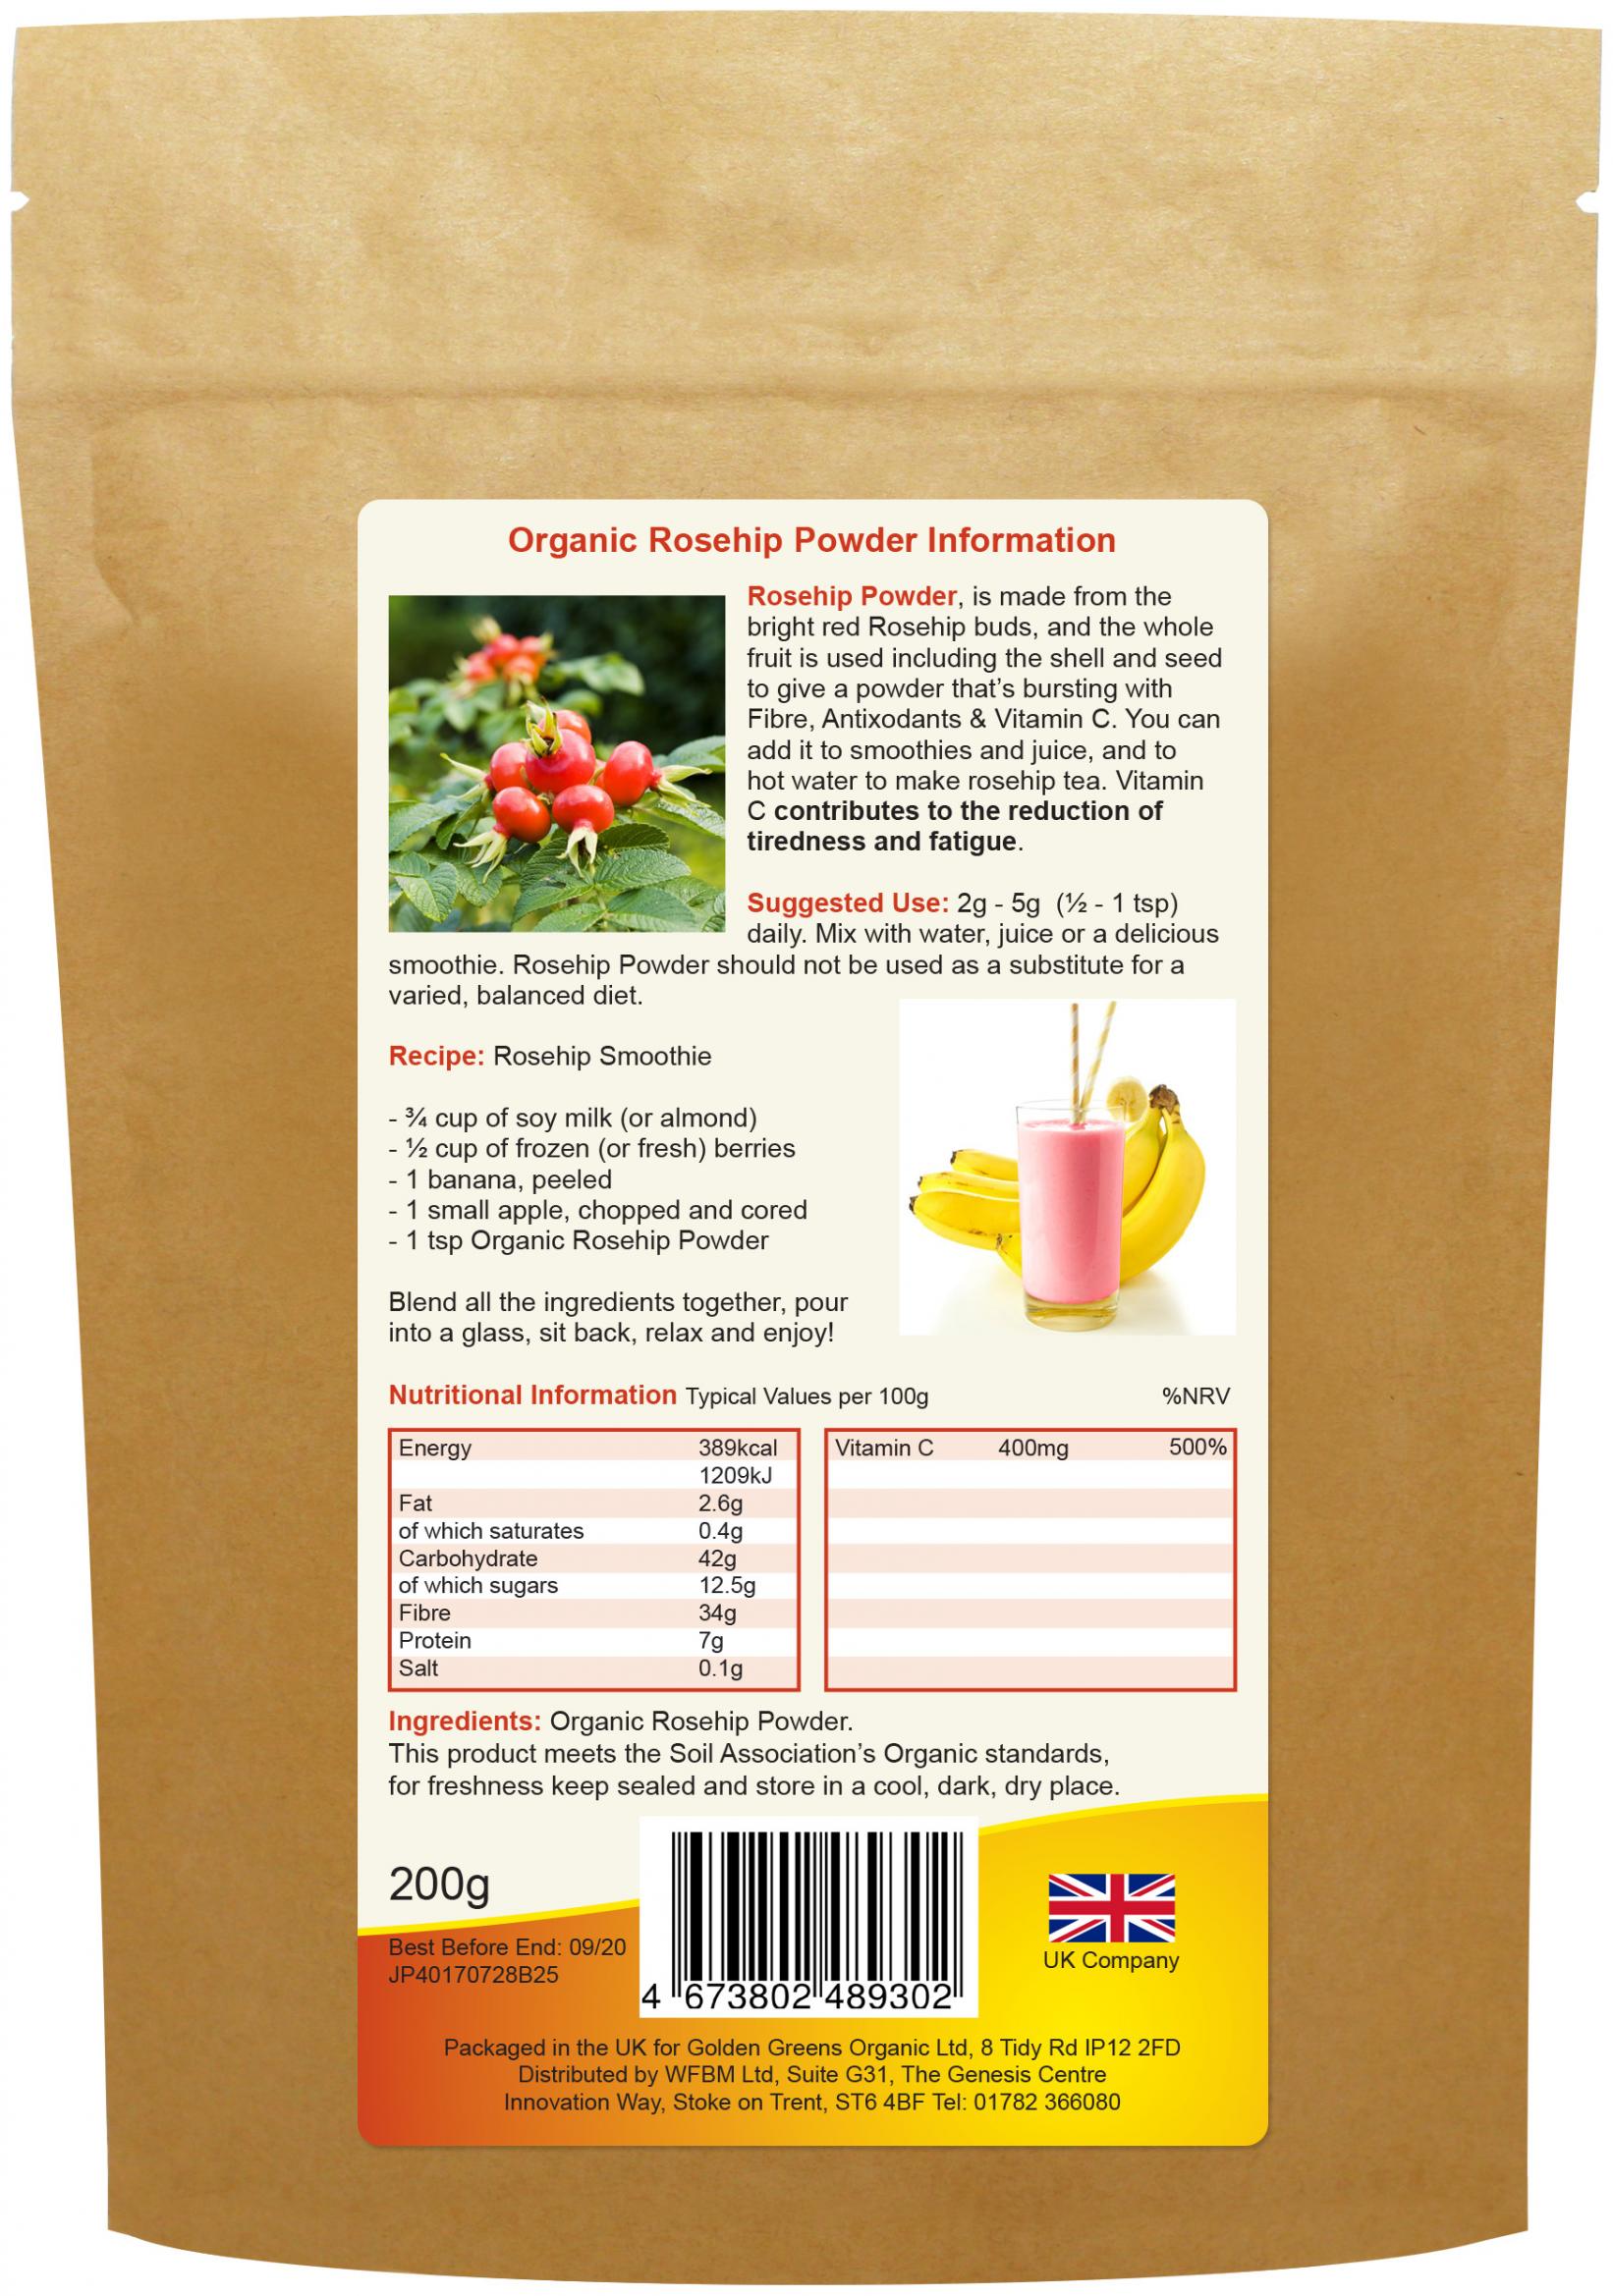 Golden Greens (Greens Organic) Organic Rosehip Powder 200g